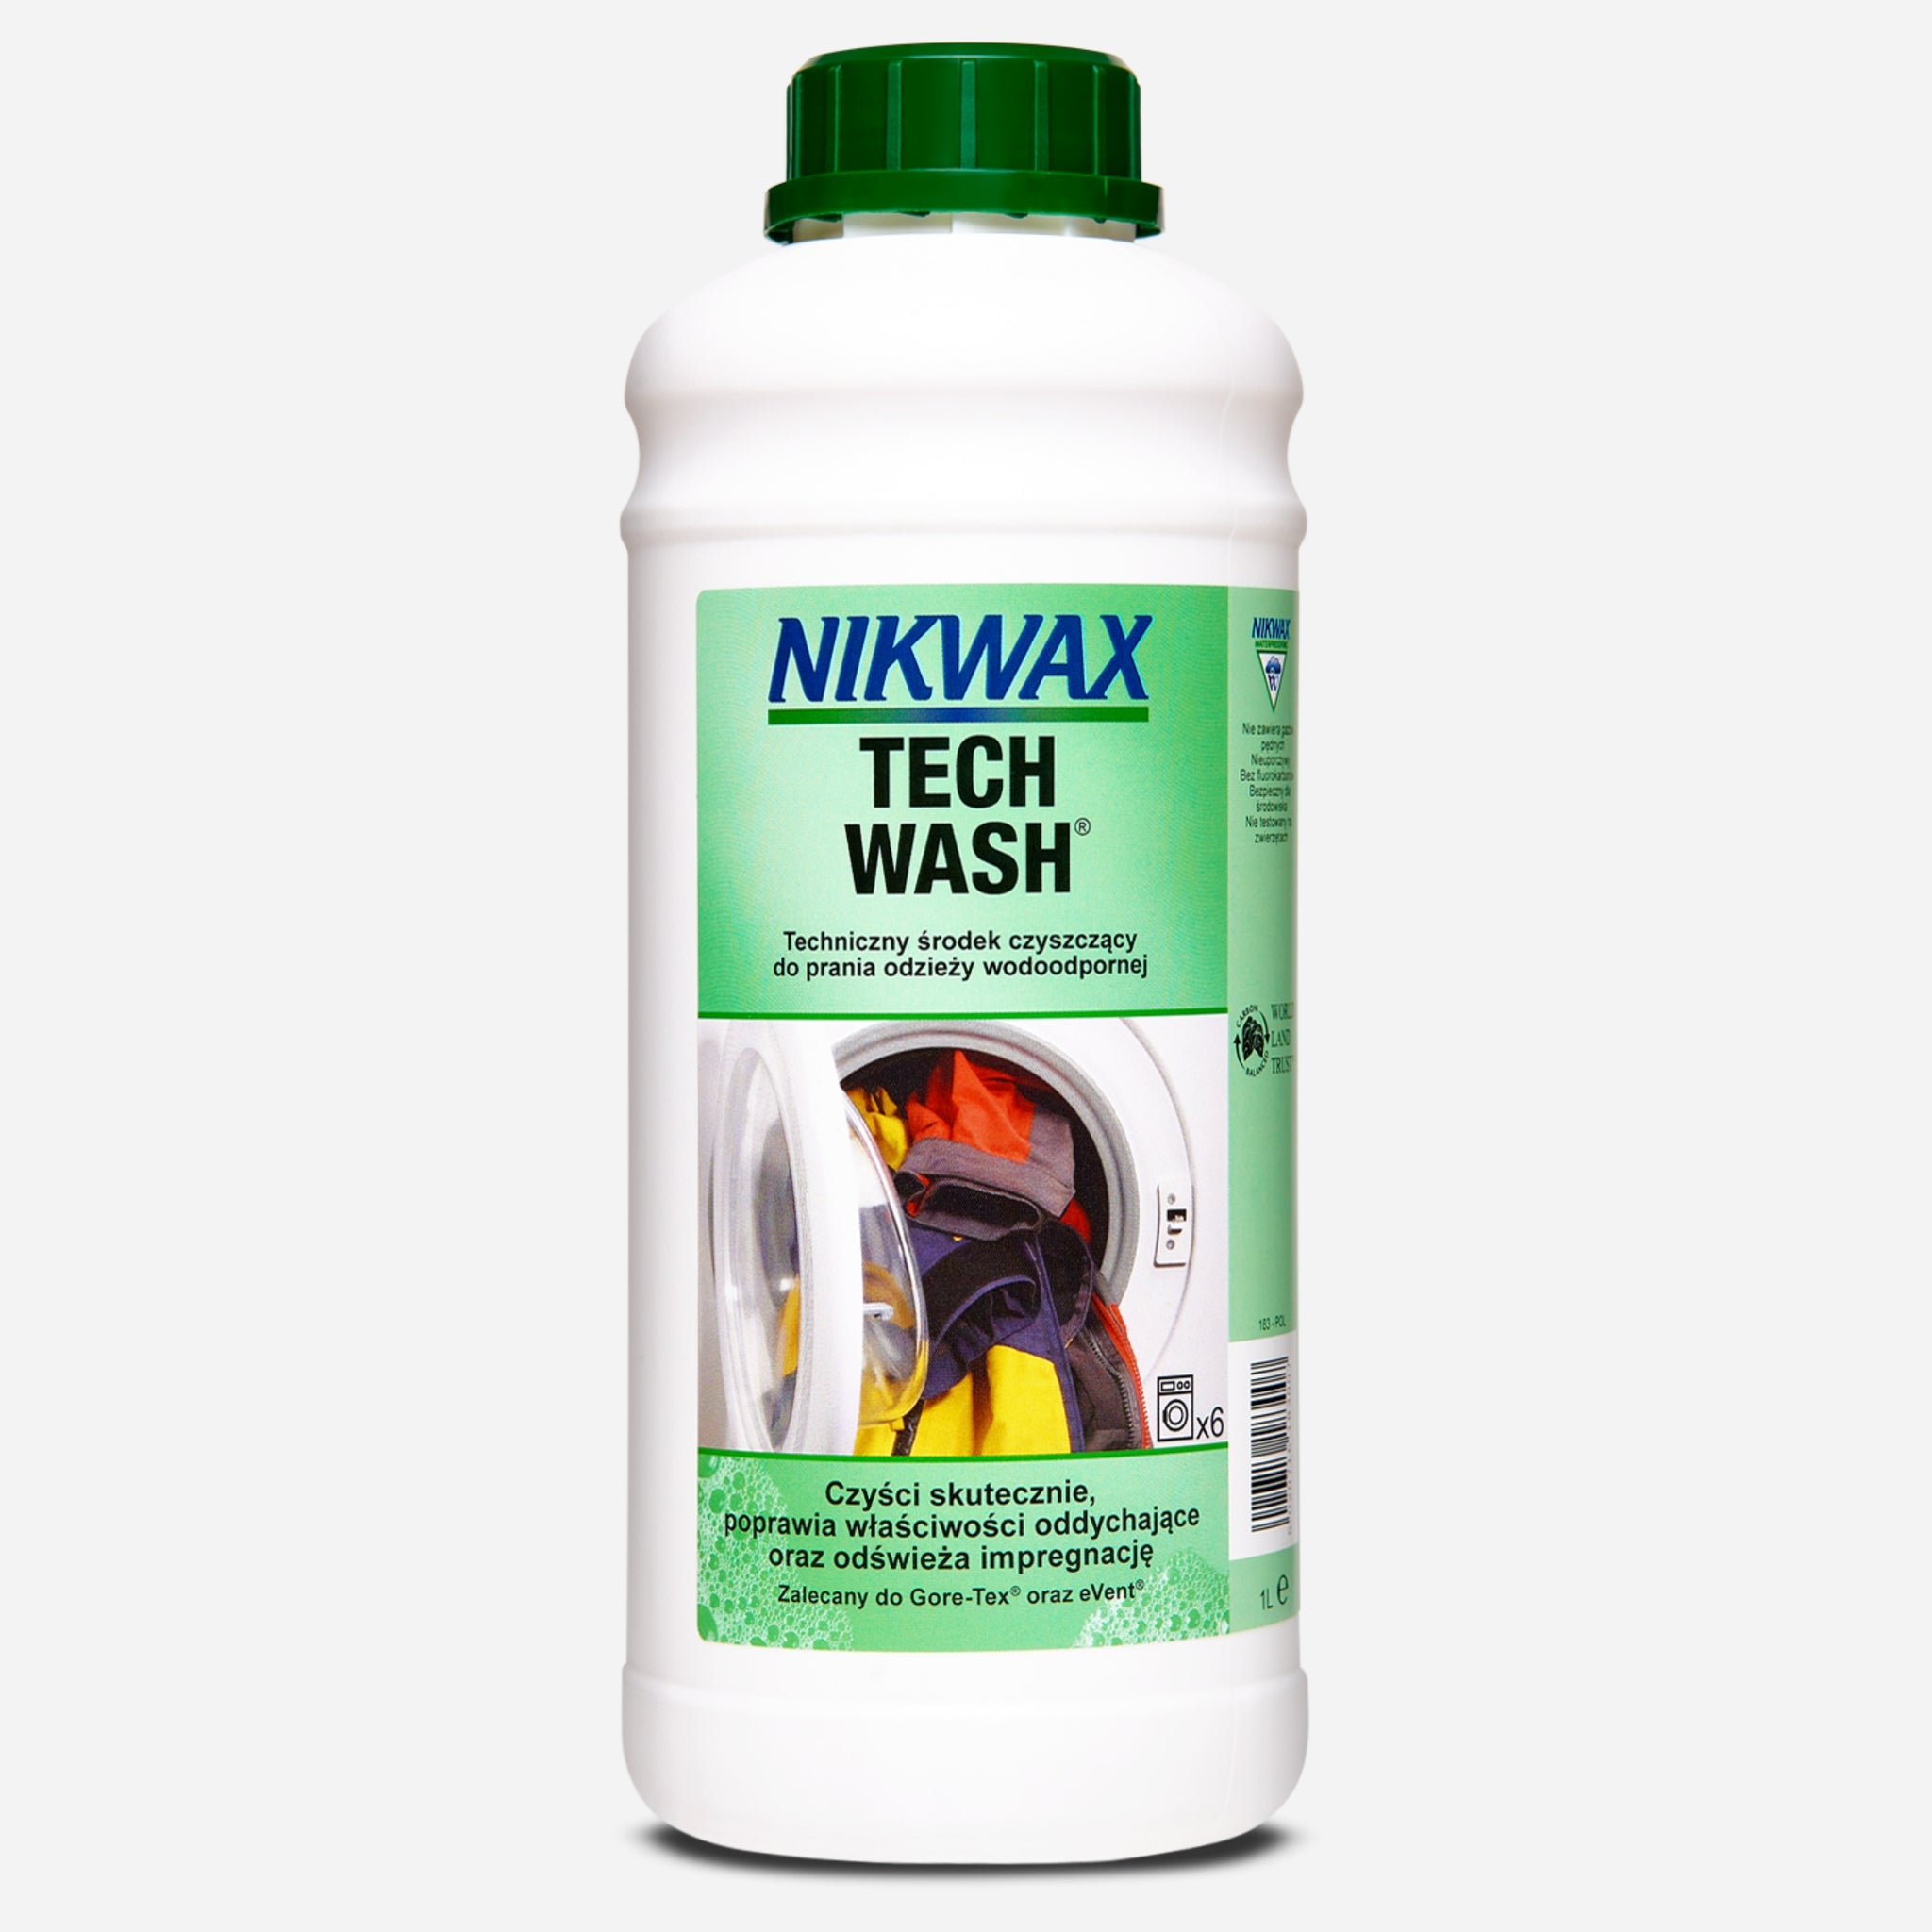 Nikwax - Tech Wash® membrane laundry detergent 1 Liter